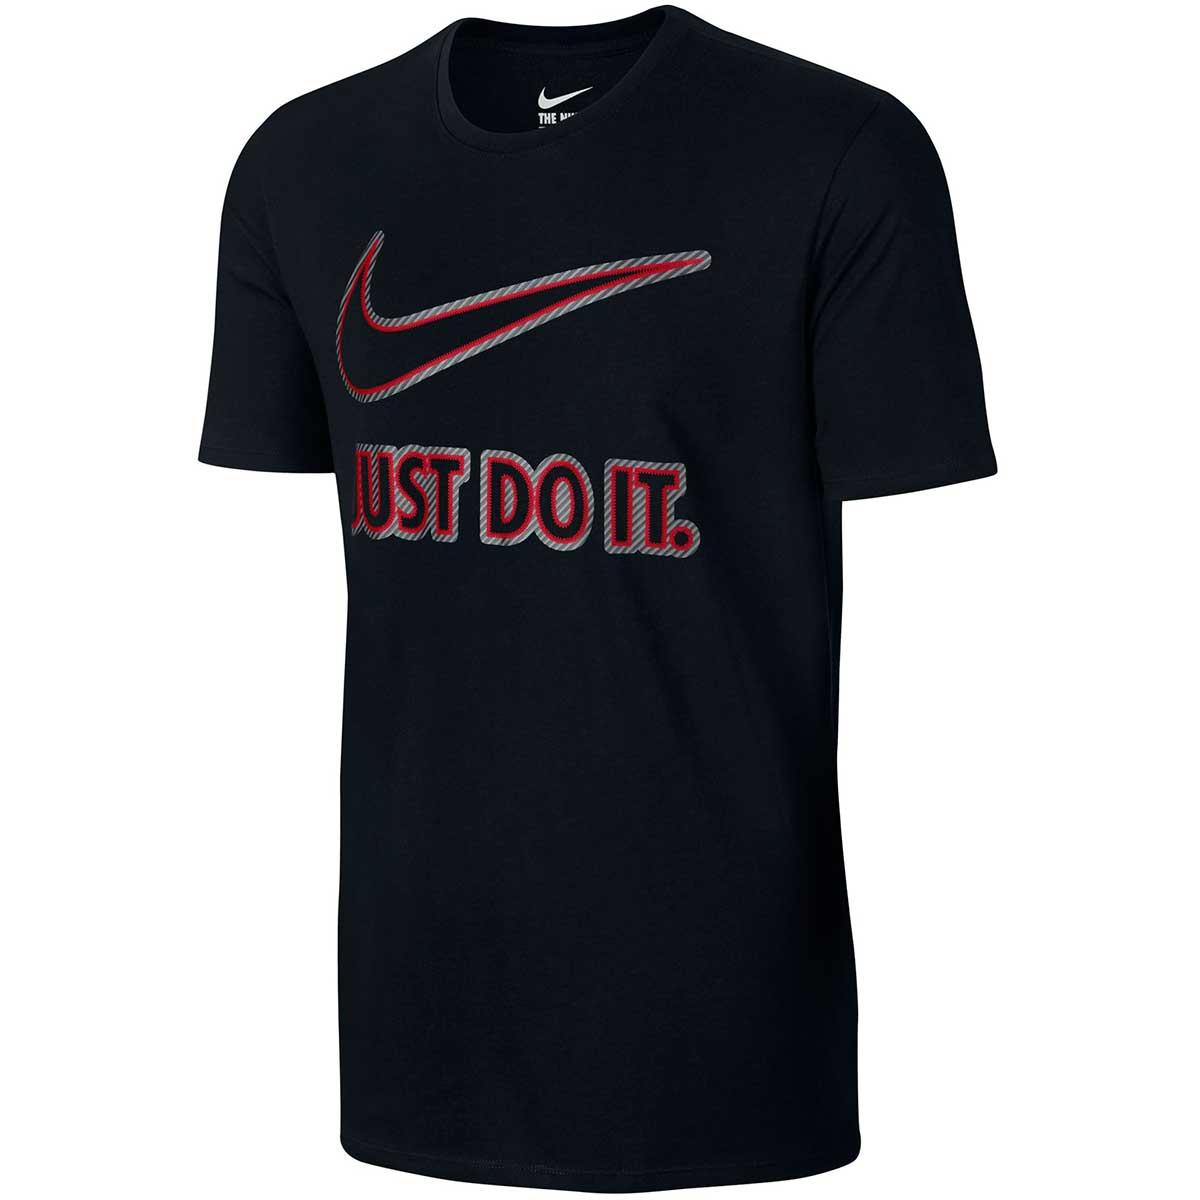 Buy Nike Mens T-shirt (Black/Red) Online India